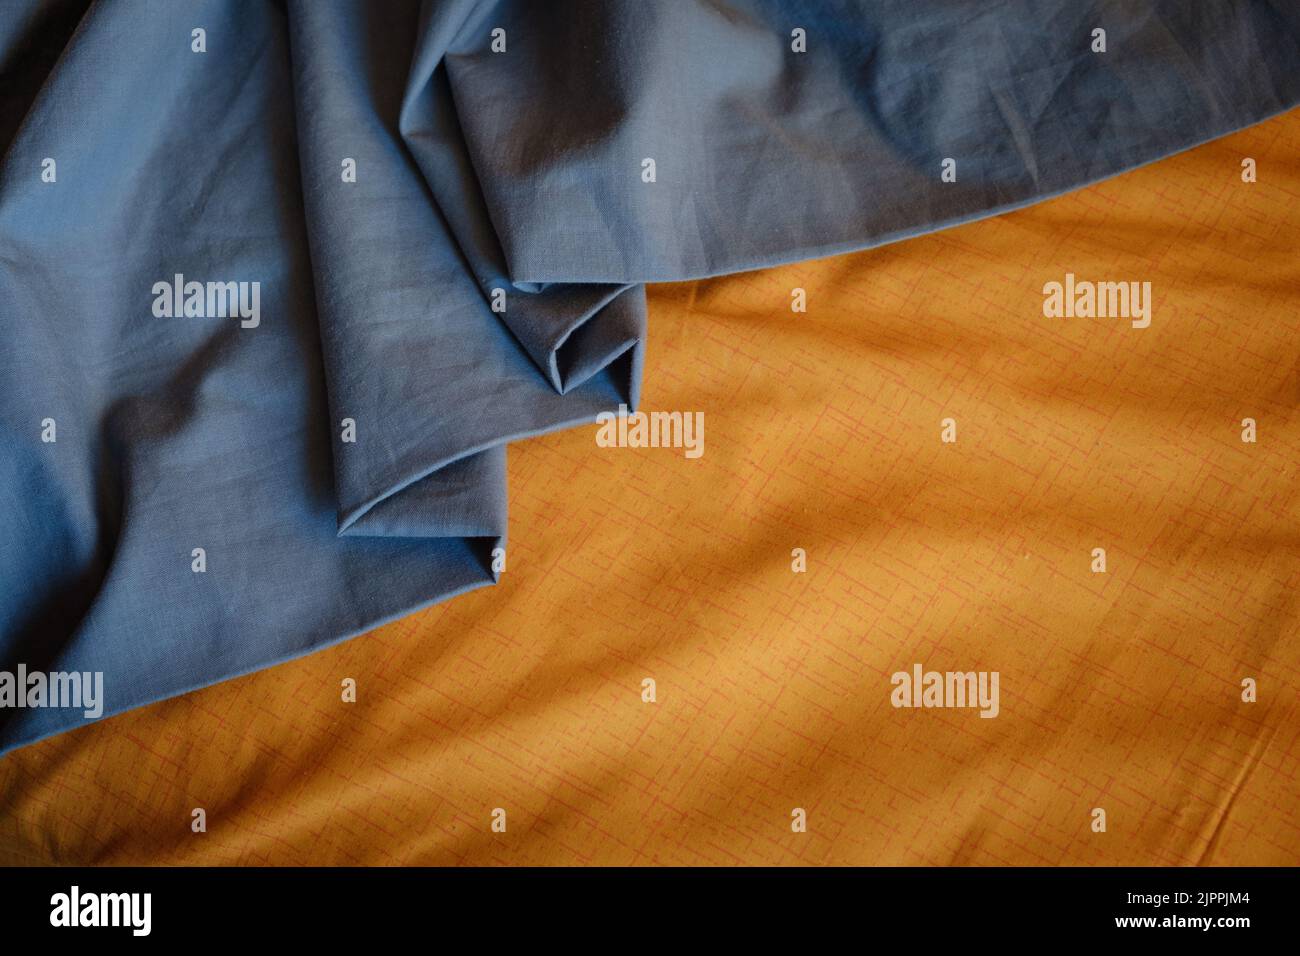 Bicolor background gray orange fabric, crumpled fabric folds, selective focus Stock Photo